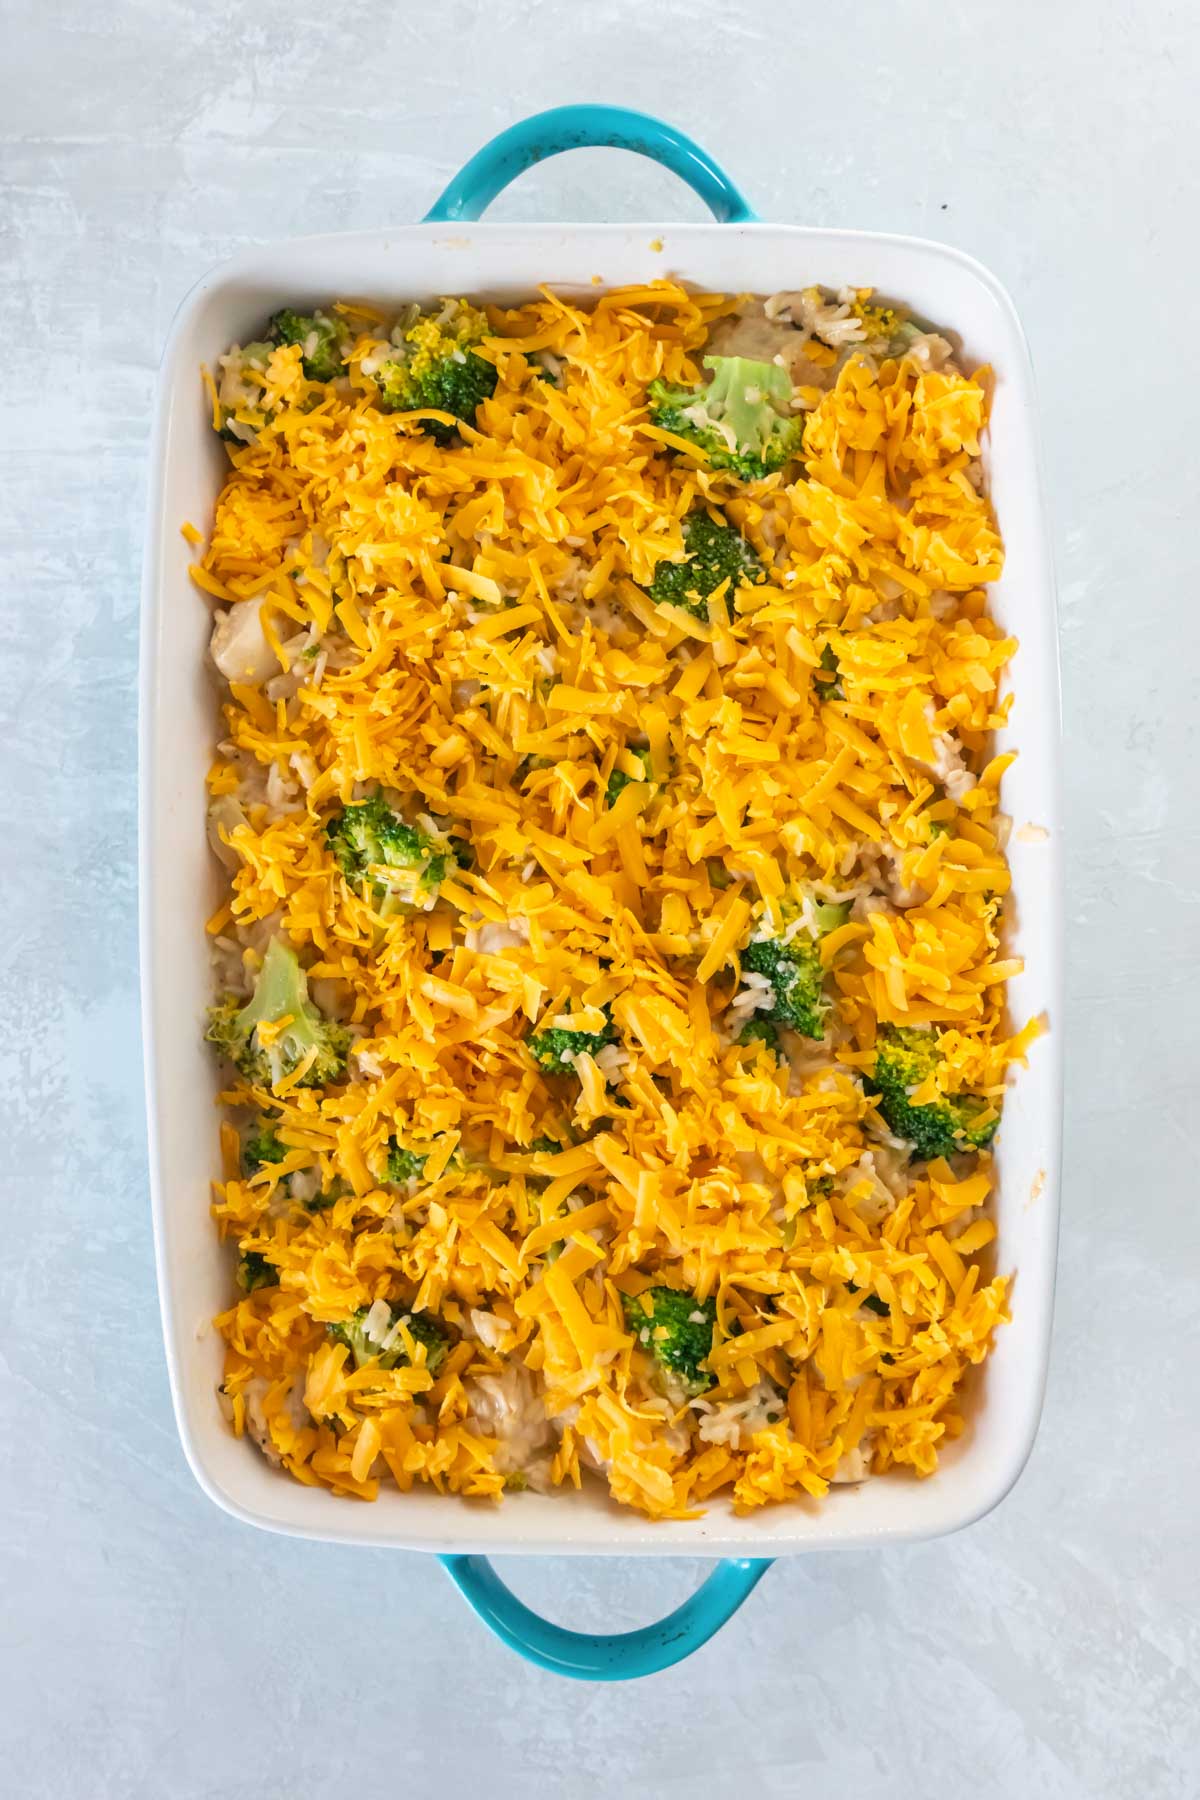 Unbaked chicken broccoli rice casserole in baking dish.